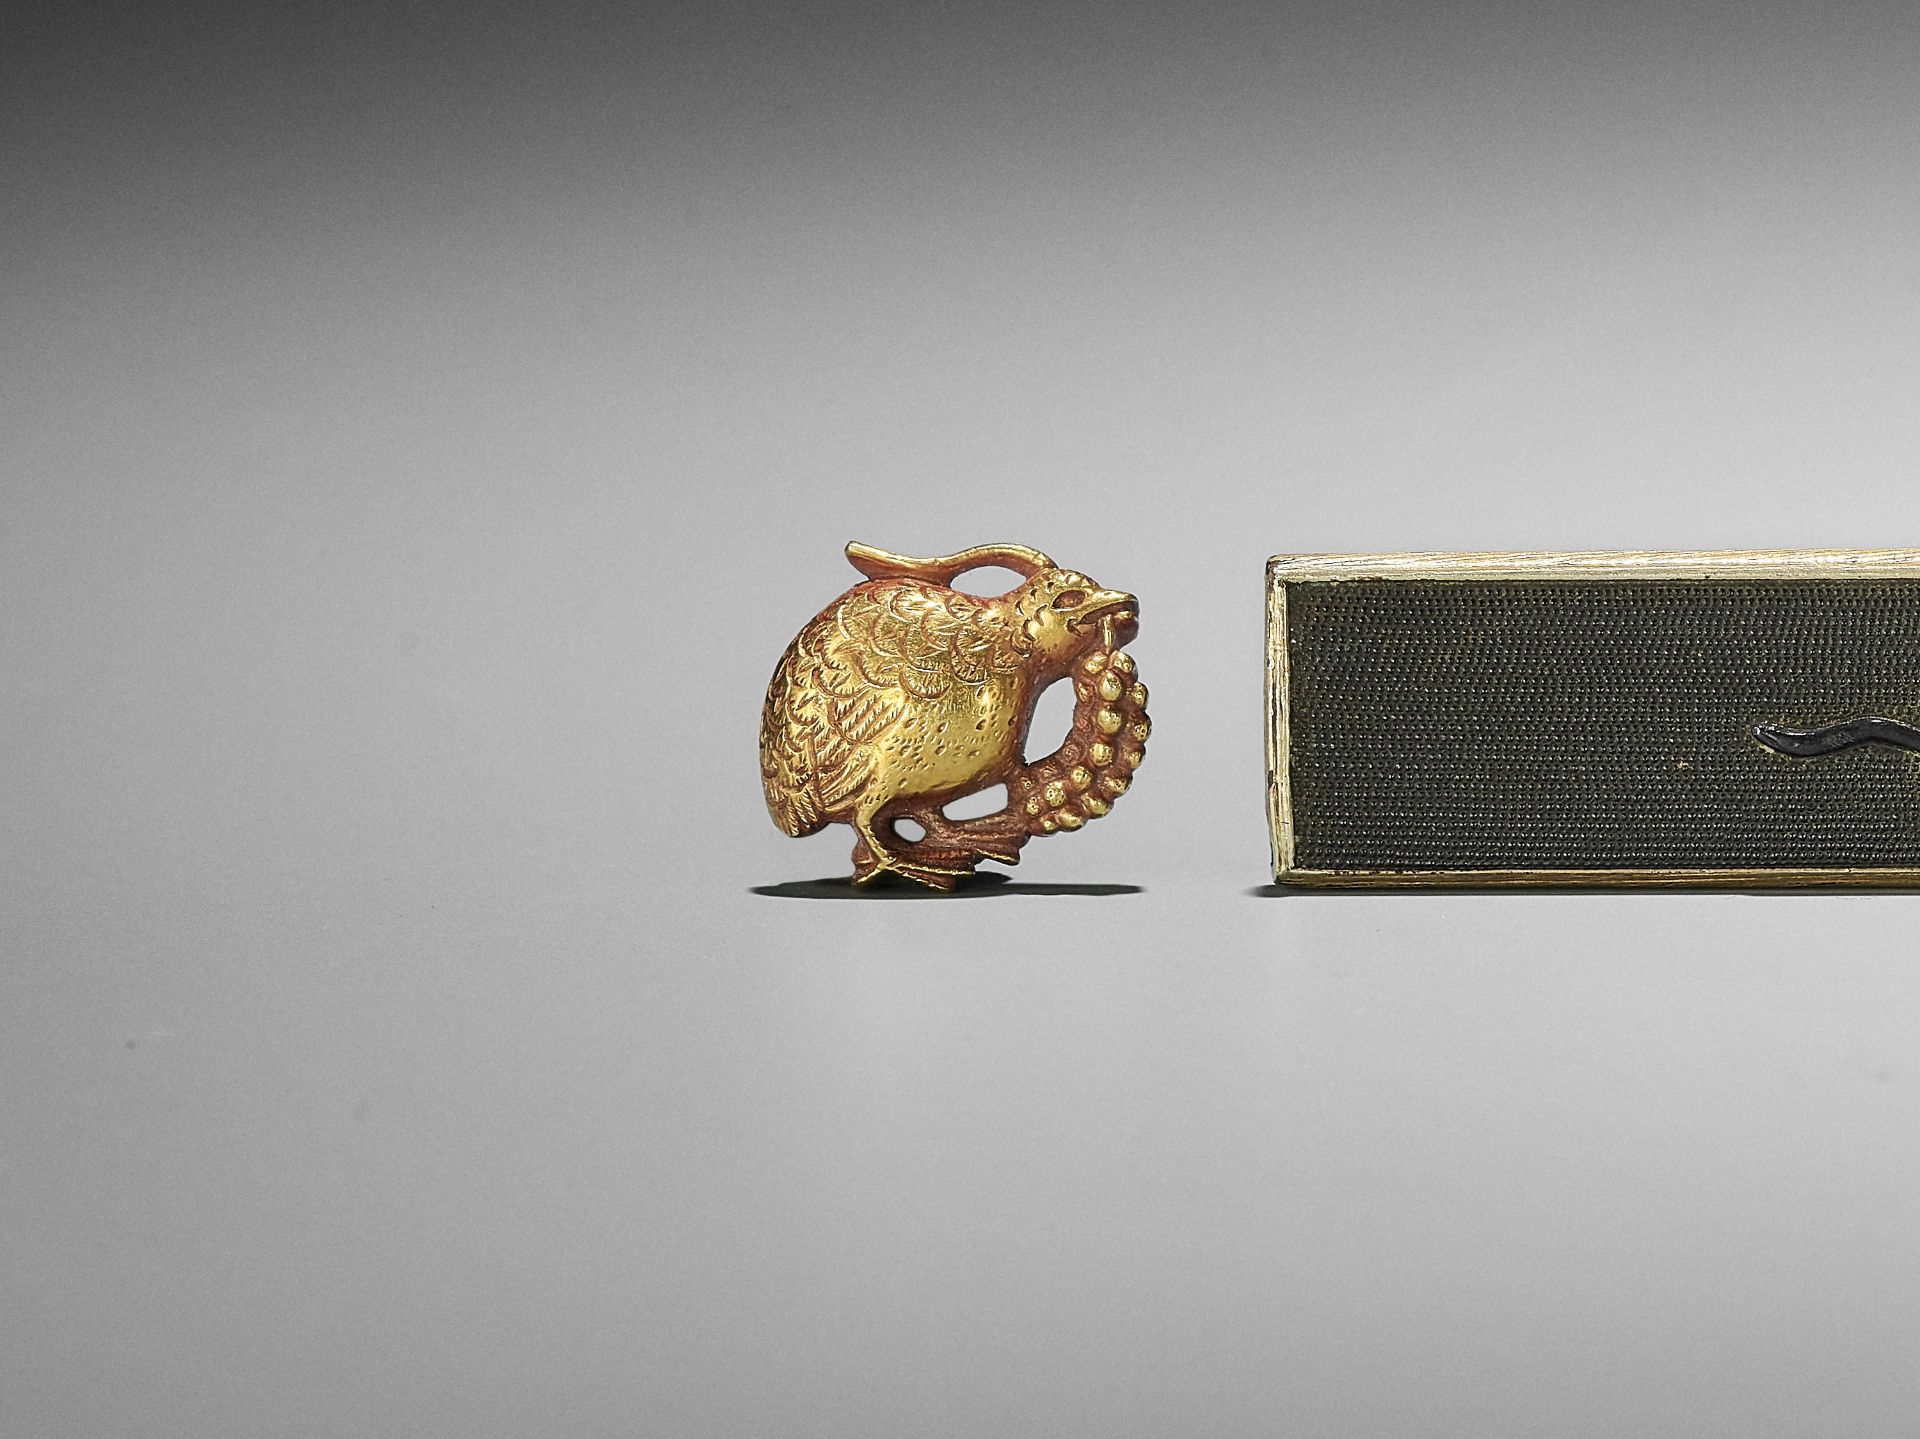 A RARE SET OF A KOZUKA AND MATCHING GOLD MENUKI PAIR DEPICTING QUAILS AND MILLET - Image 4 of 8